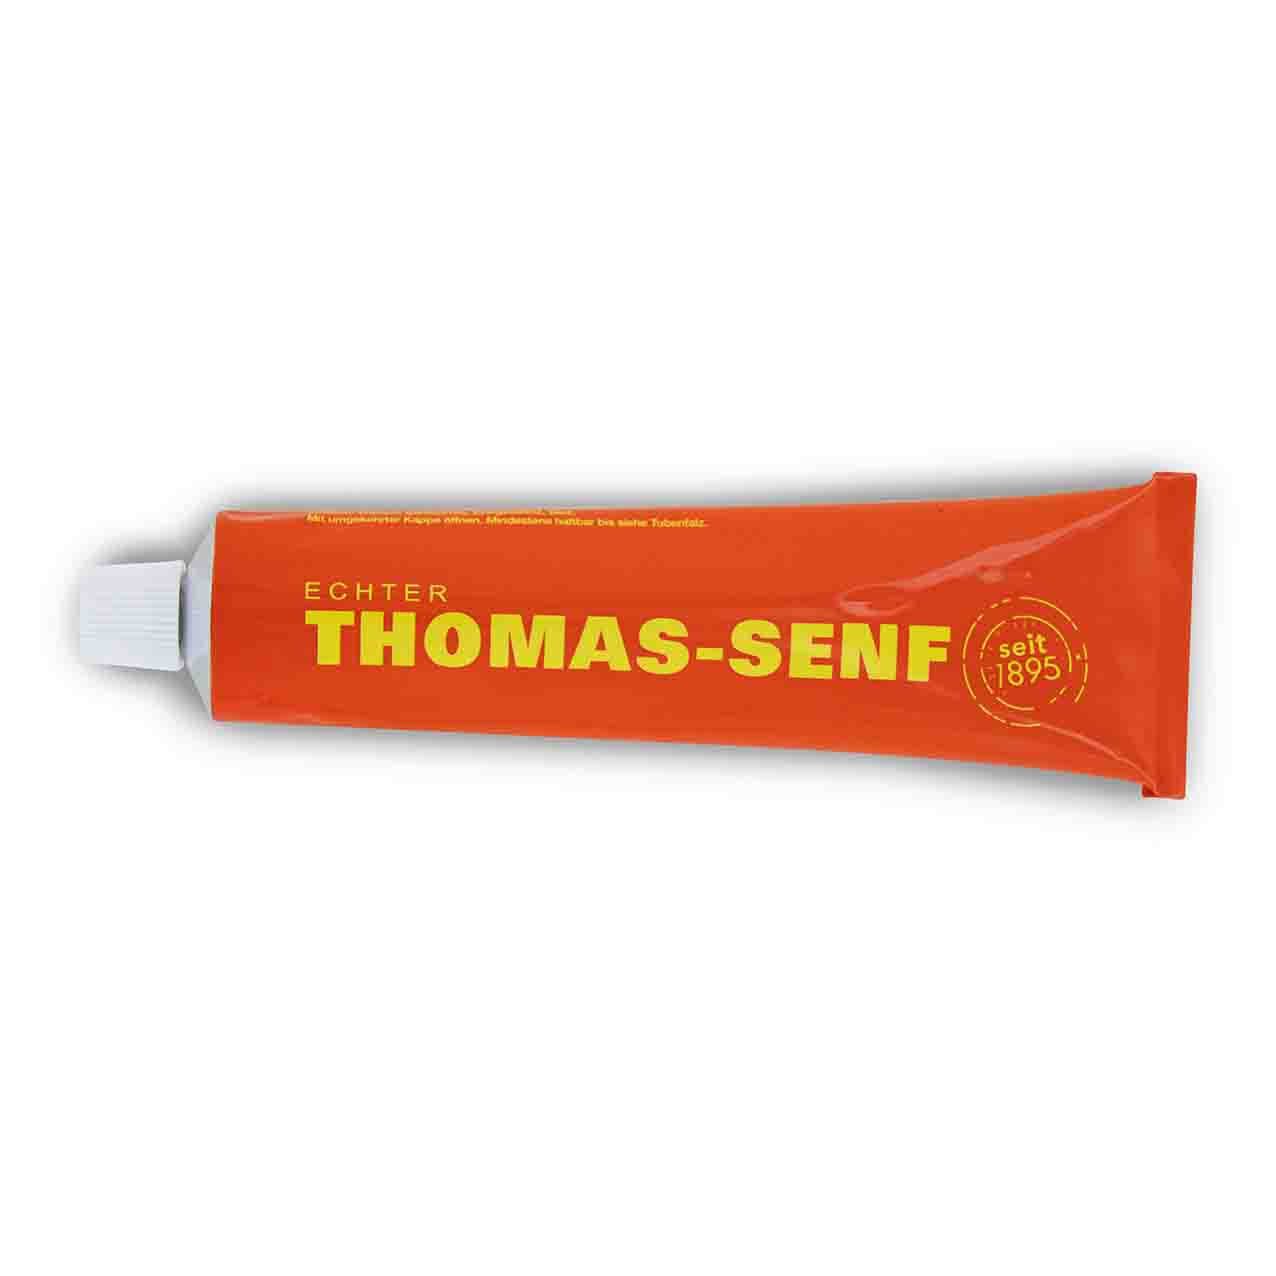 Echter Thomas Senf Tube-zoom-mobil